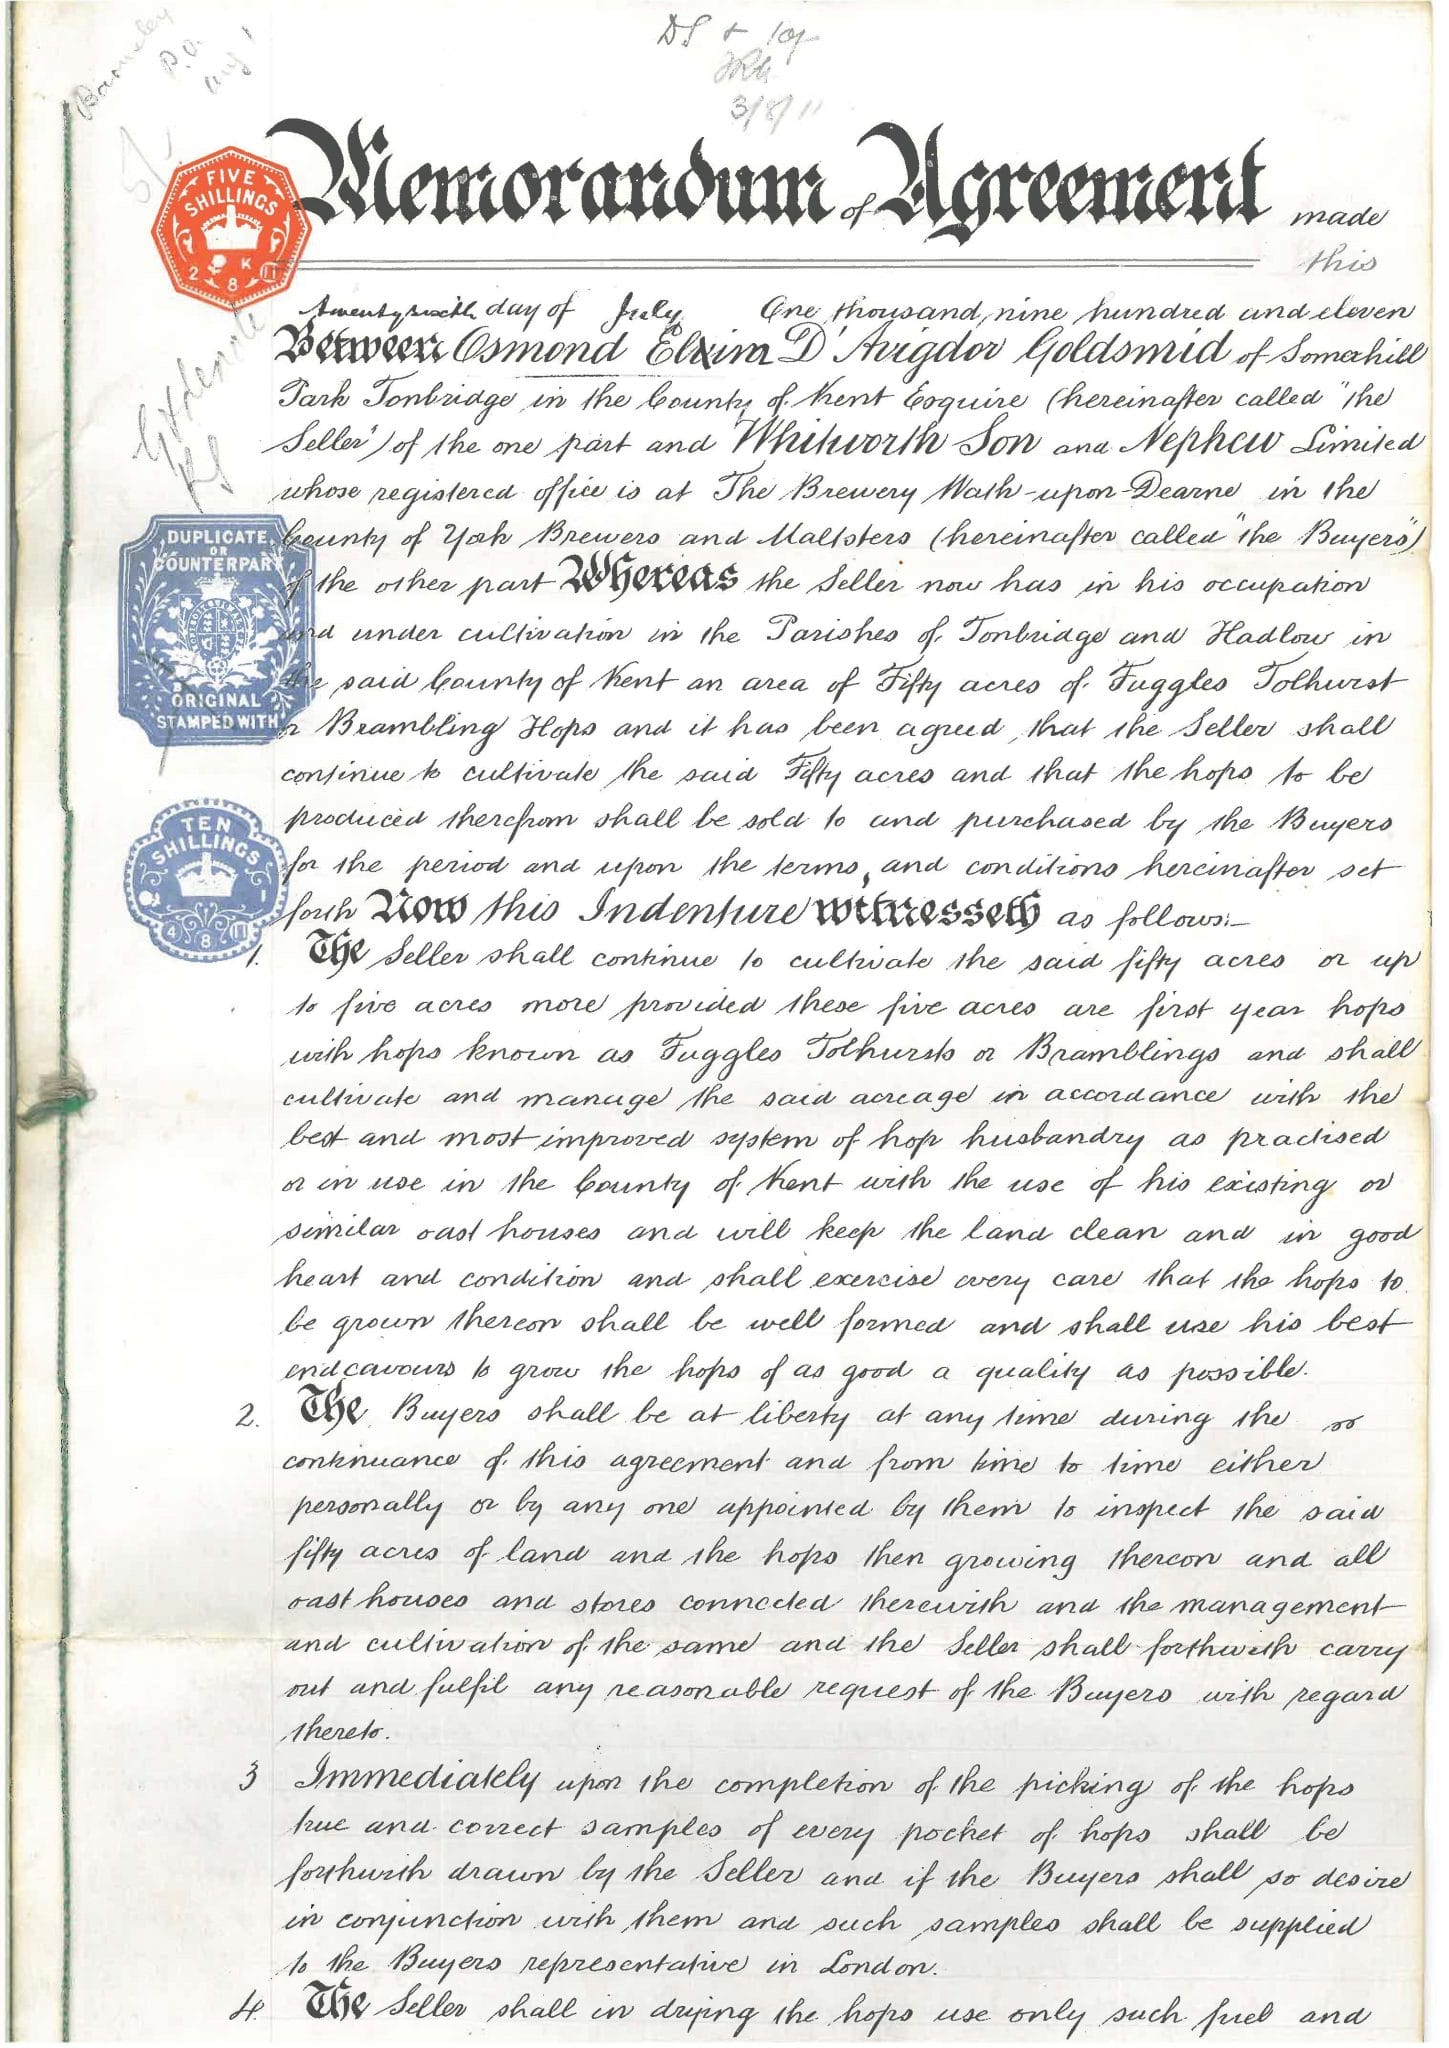 1911 memorandum agreement